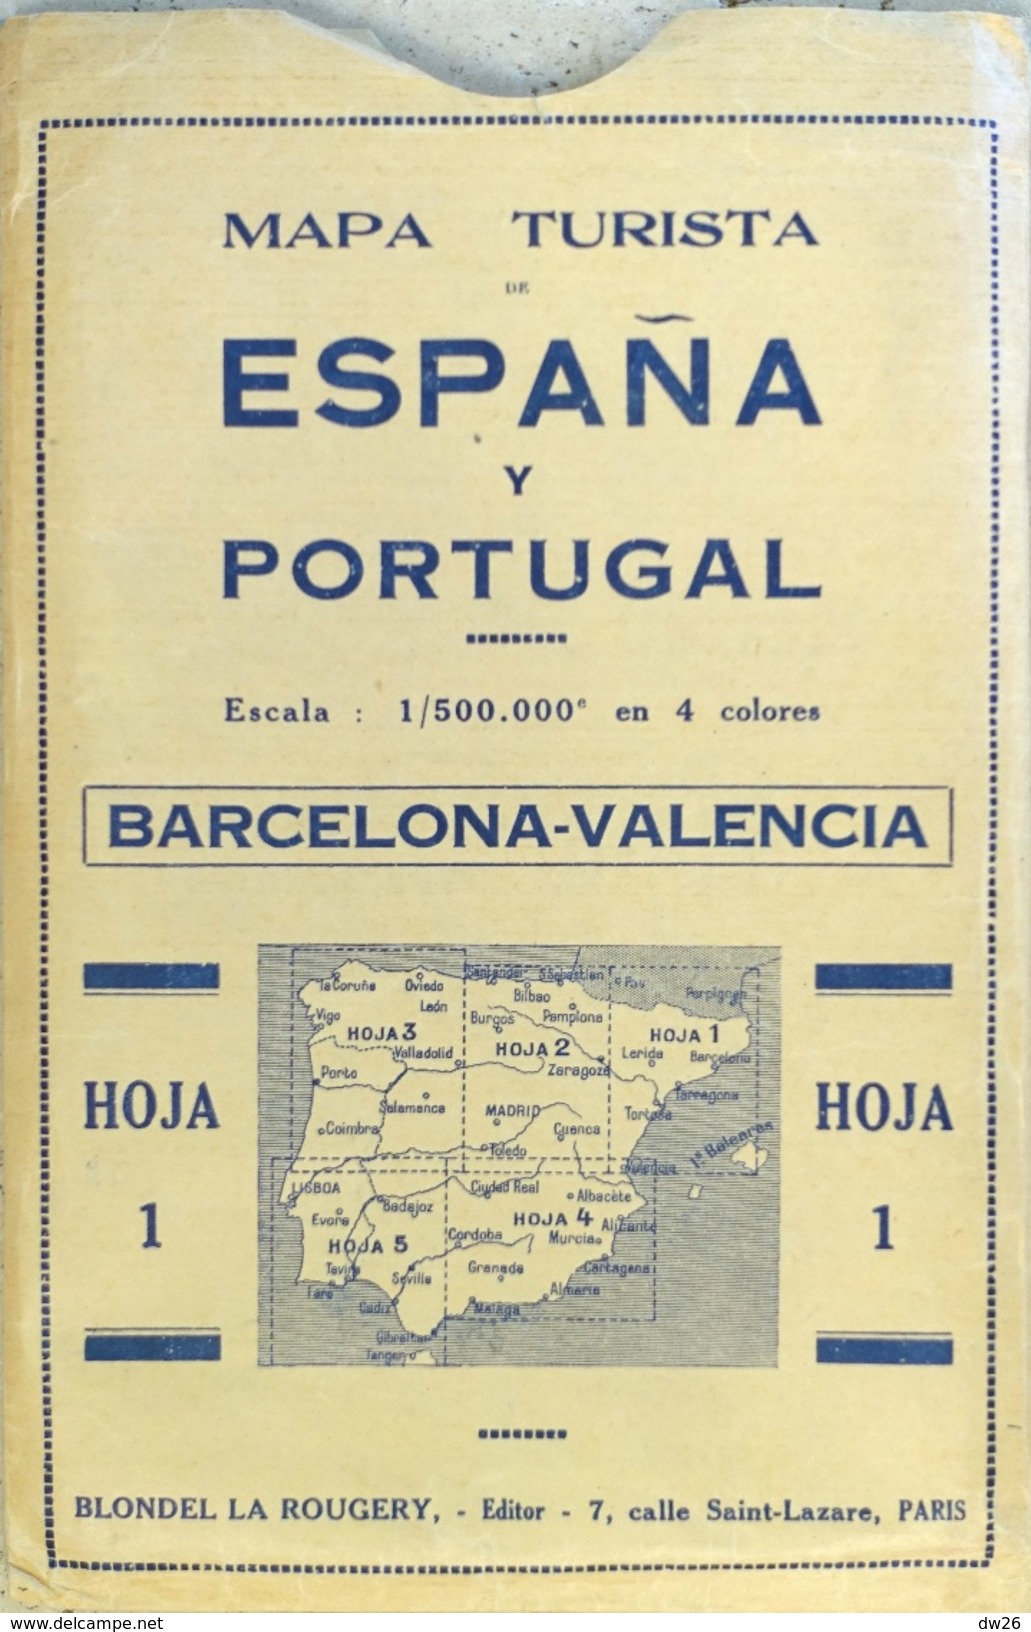 Mapa Turista Espana Y Portugal (Barcelona-Valencia-Islas Baléares) - Hoja 1 - Ed. Blondel 1938 (4 Colores) - Strassenkarten